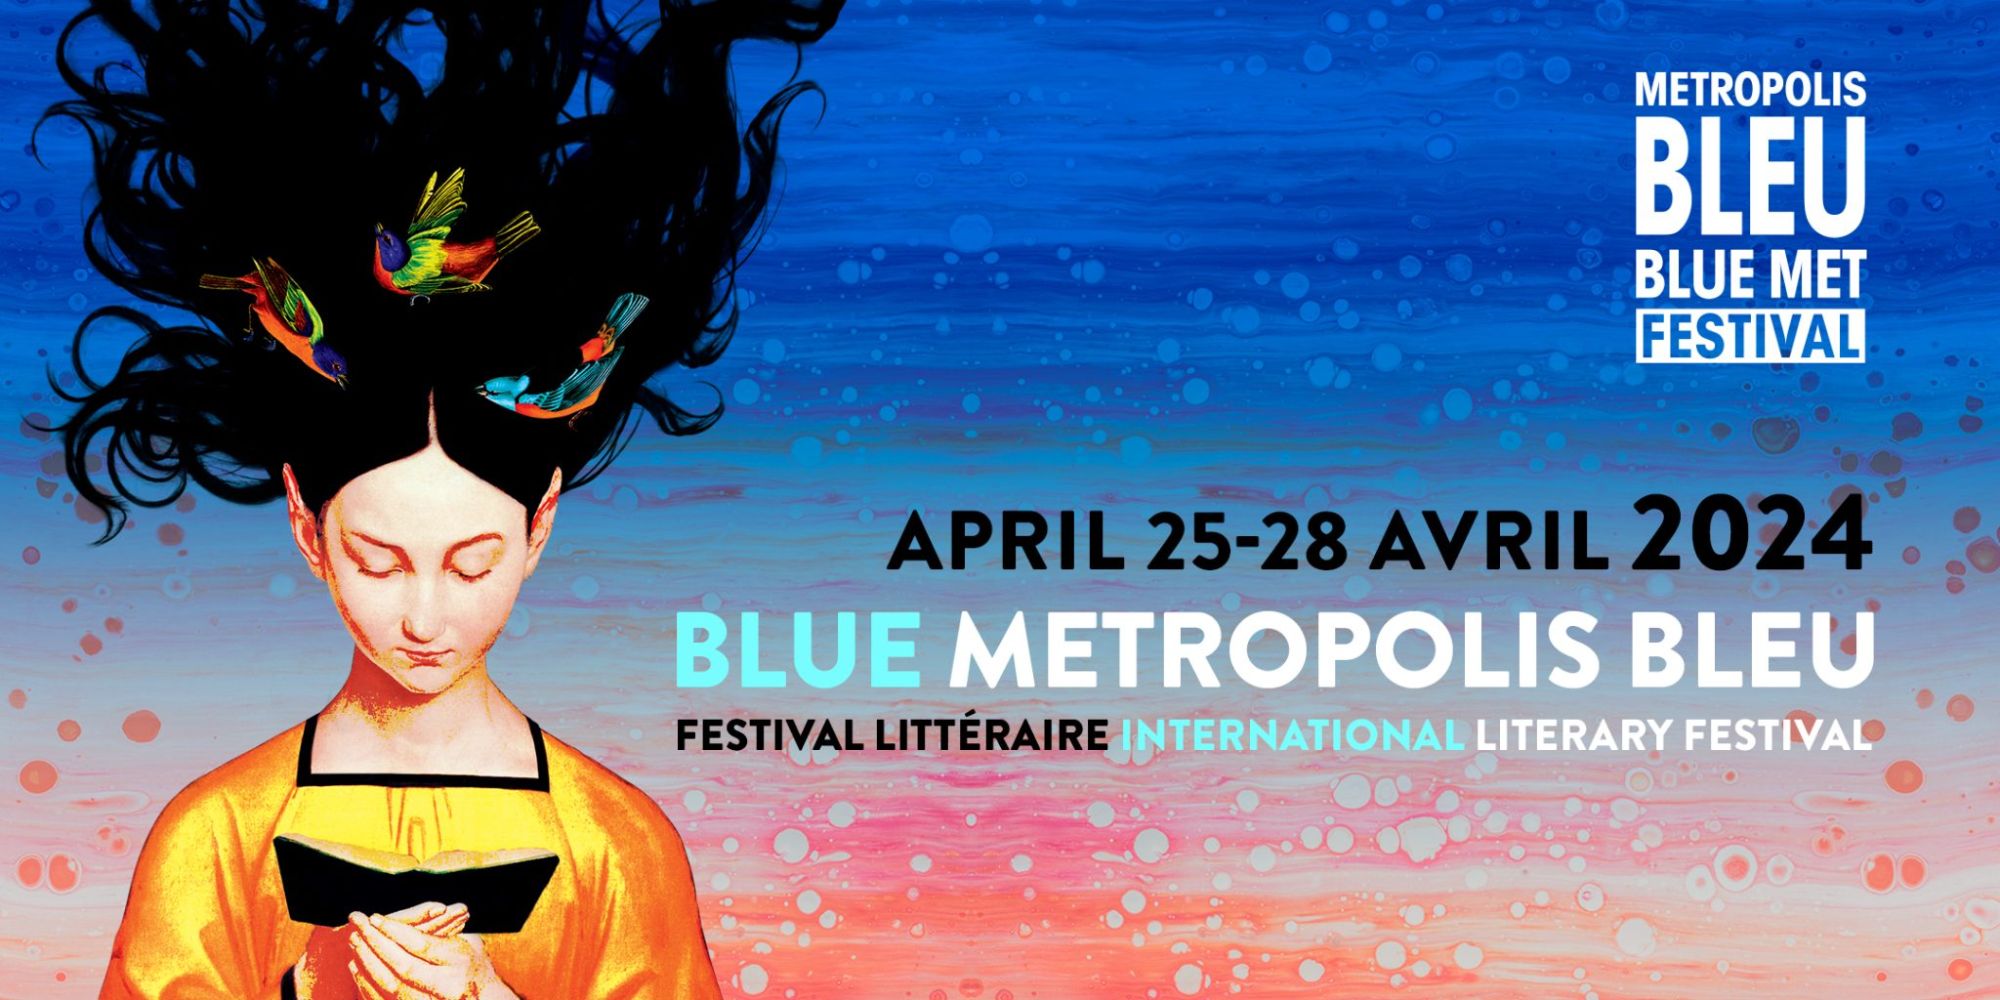 Festival littéraire international de Metropolis bleu